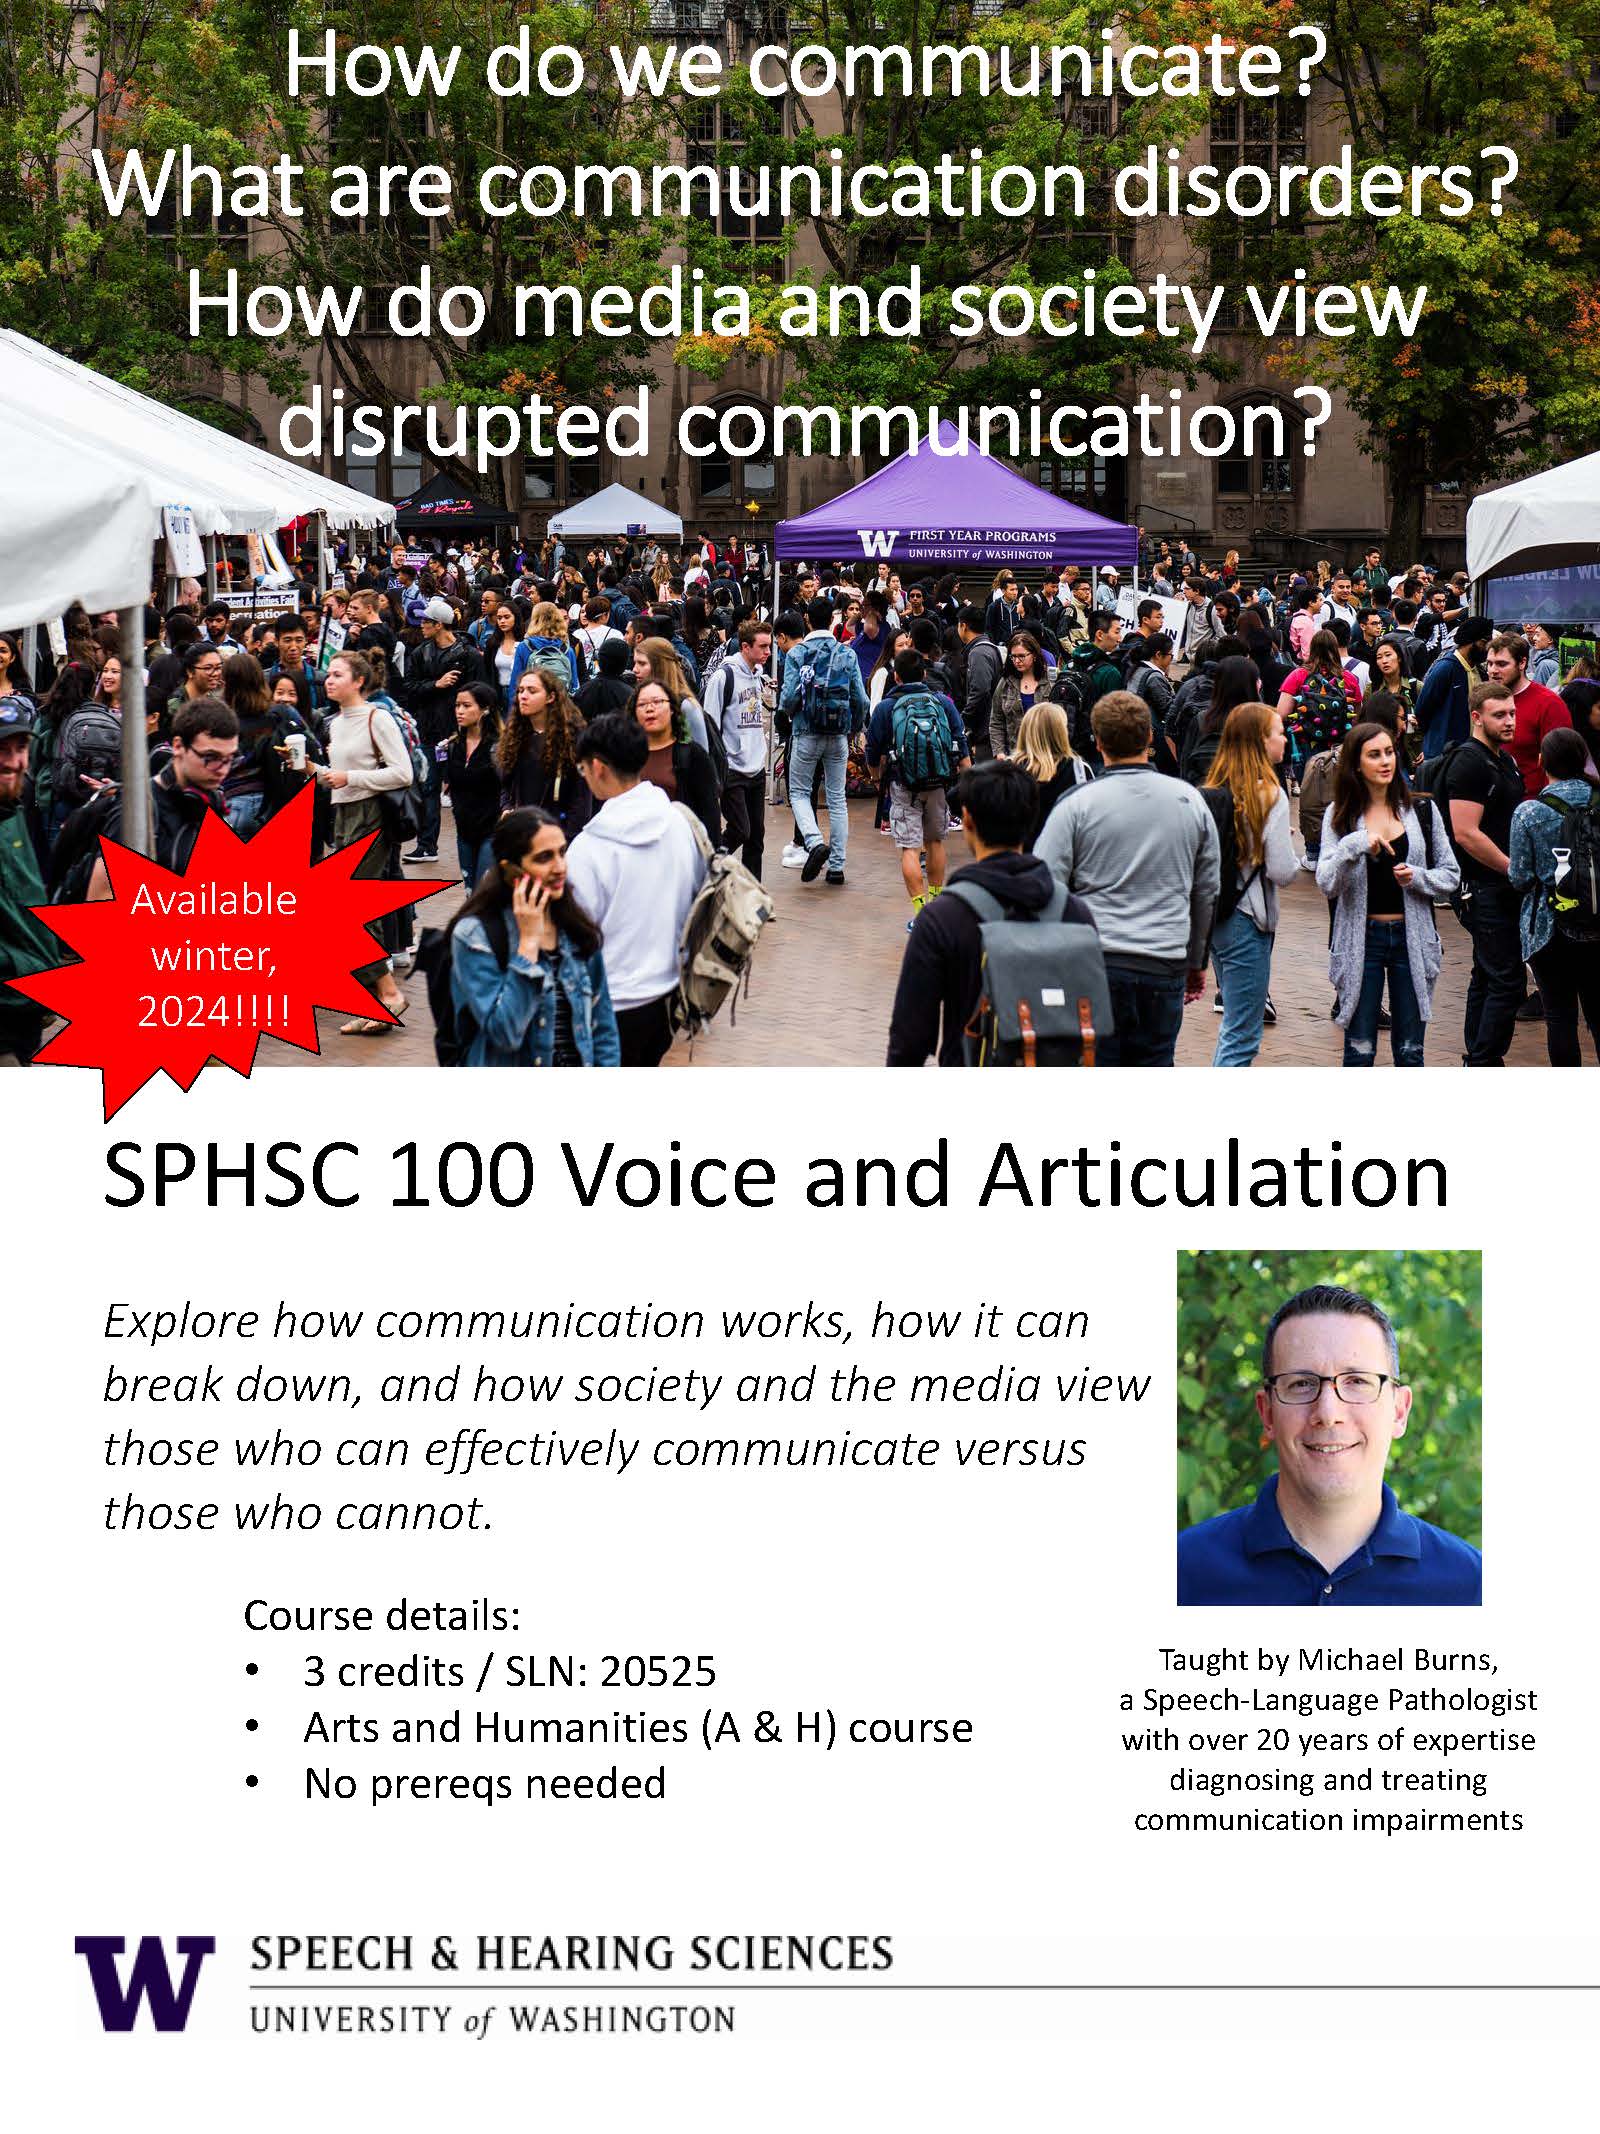 SPHSC 100 course flyer